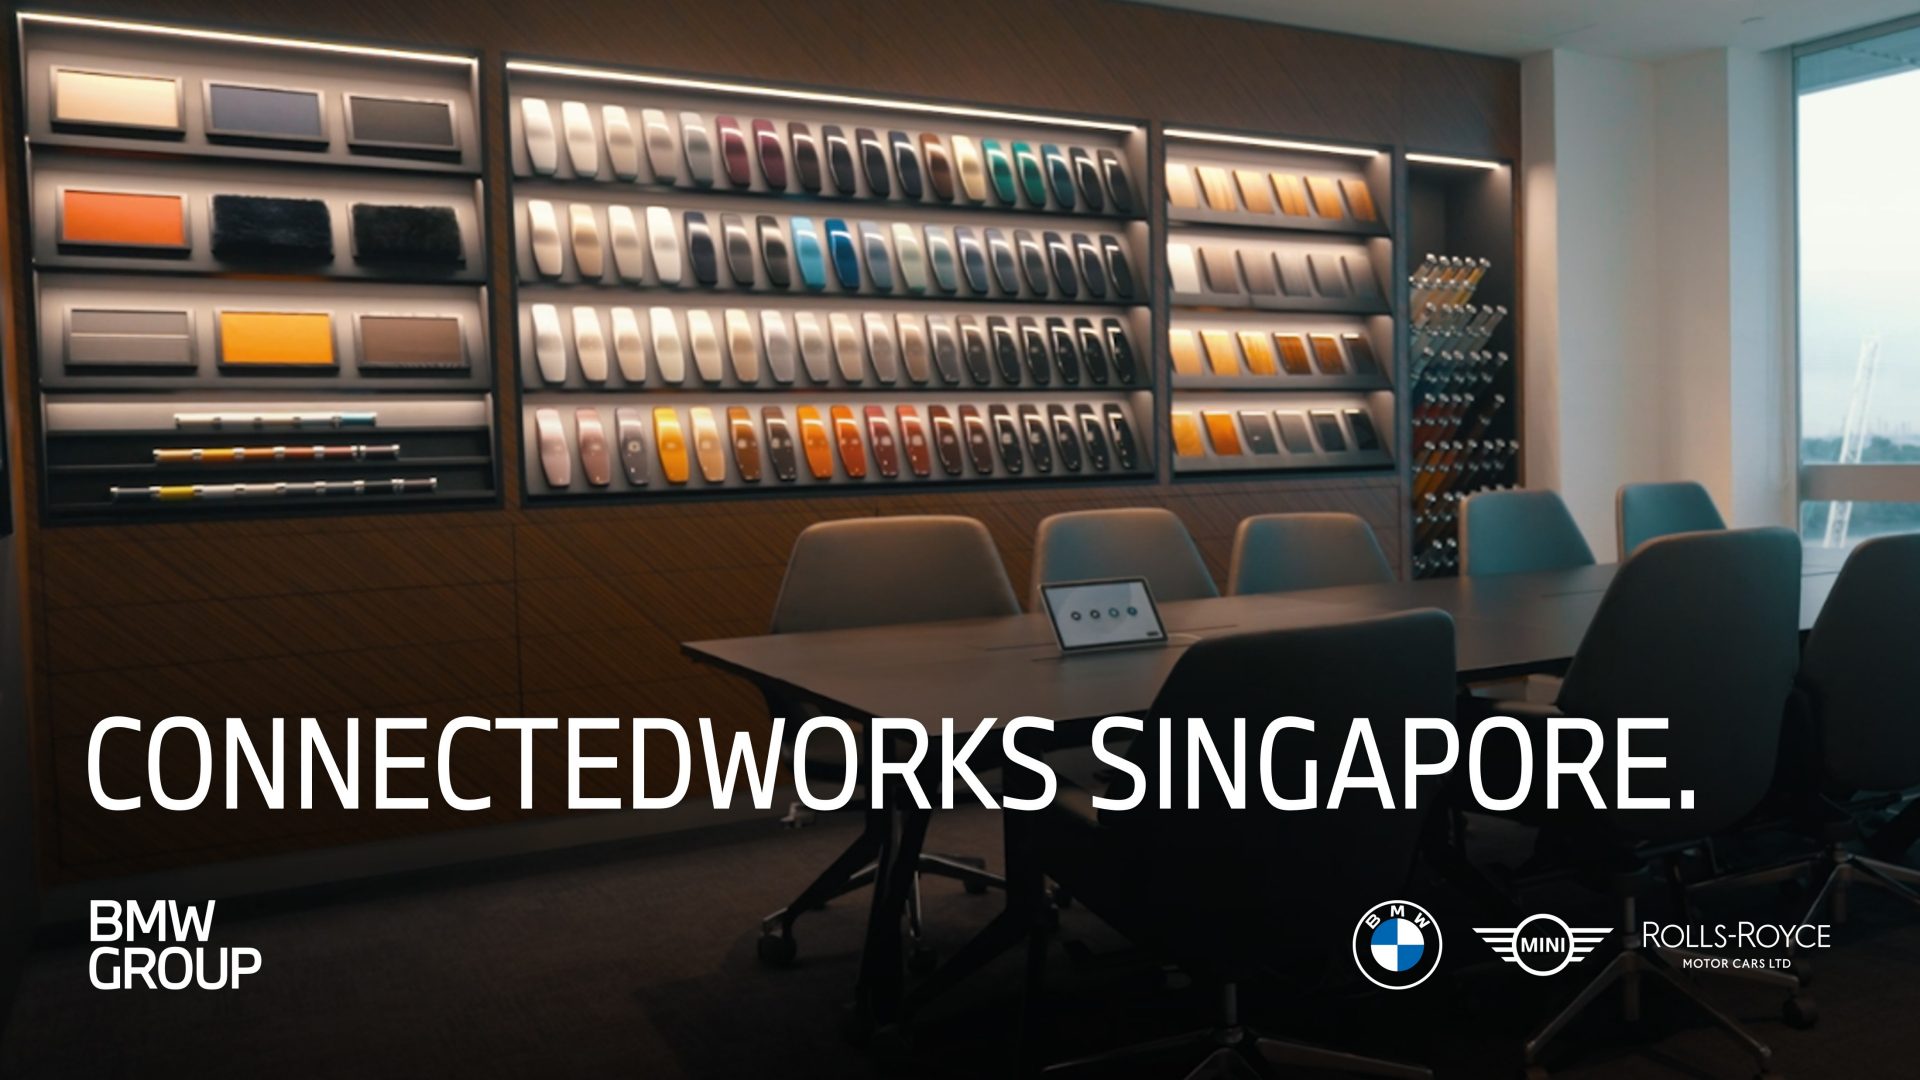 ConnectedWorks Singapore.